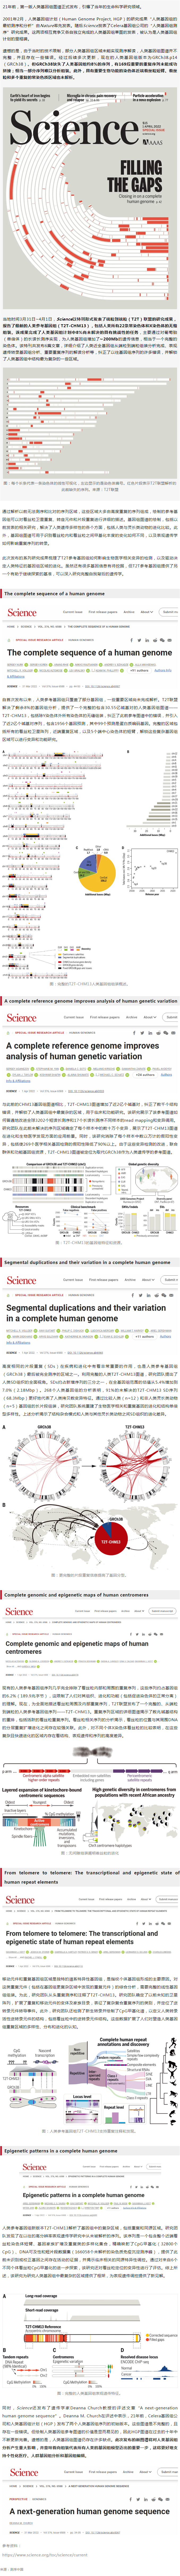 Science 特刊 6 篇长文系统梳理 T2T 参考基因组研究成果